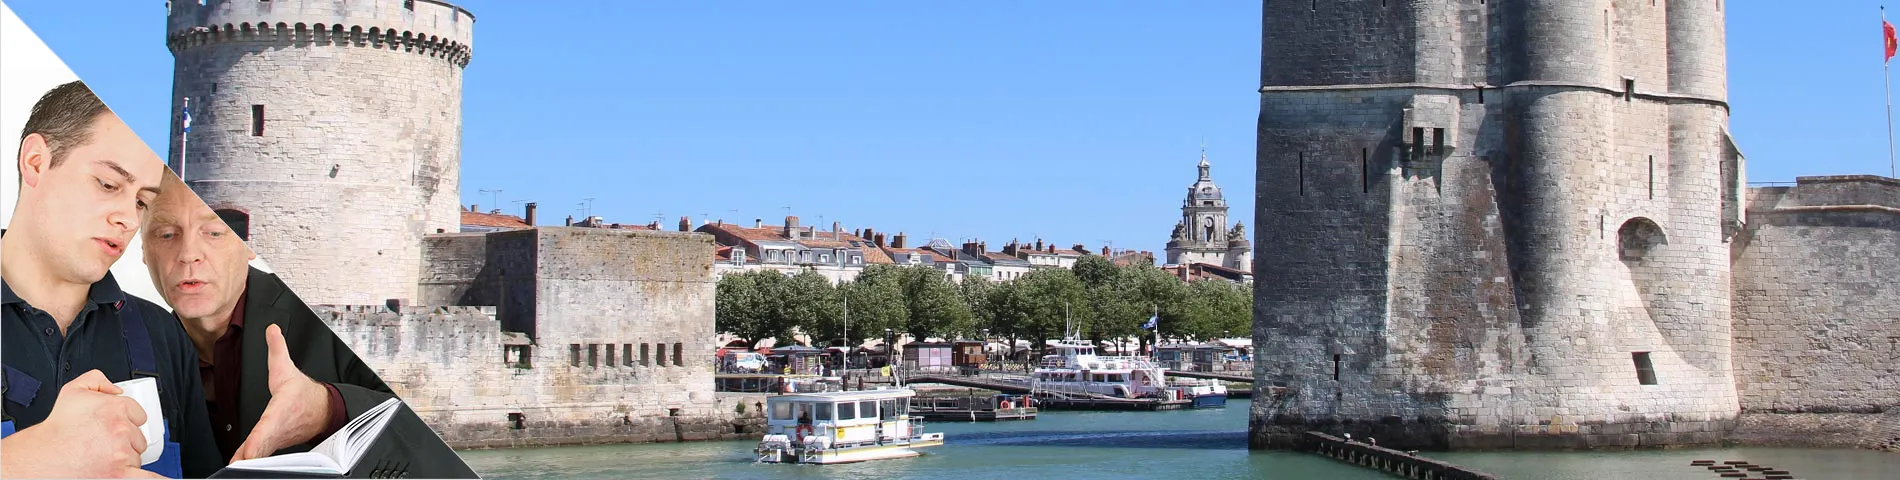 La Rochelle - Clases Particulares